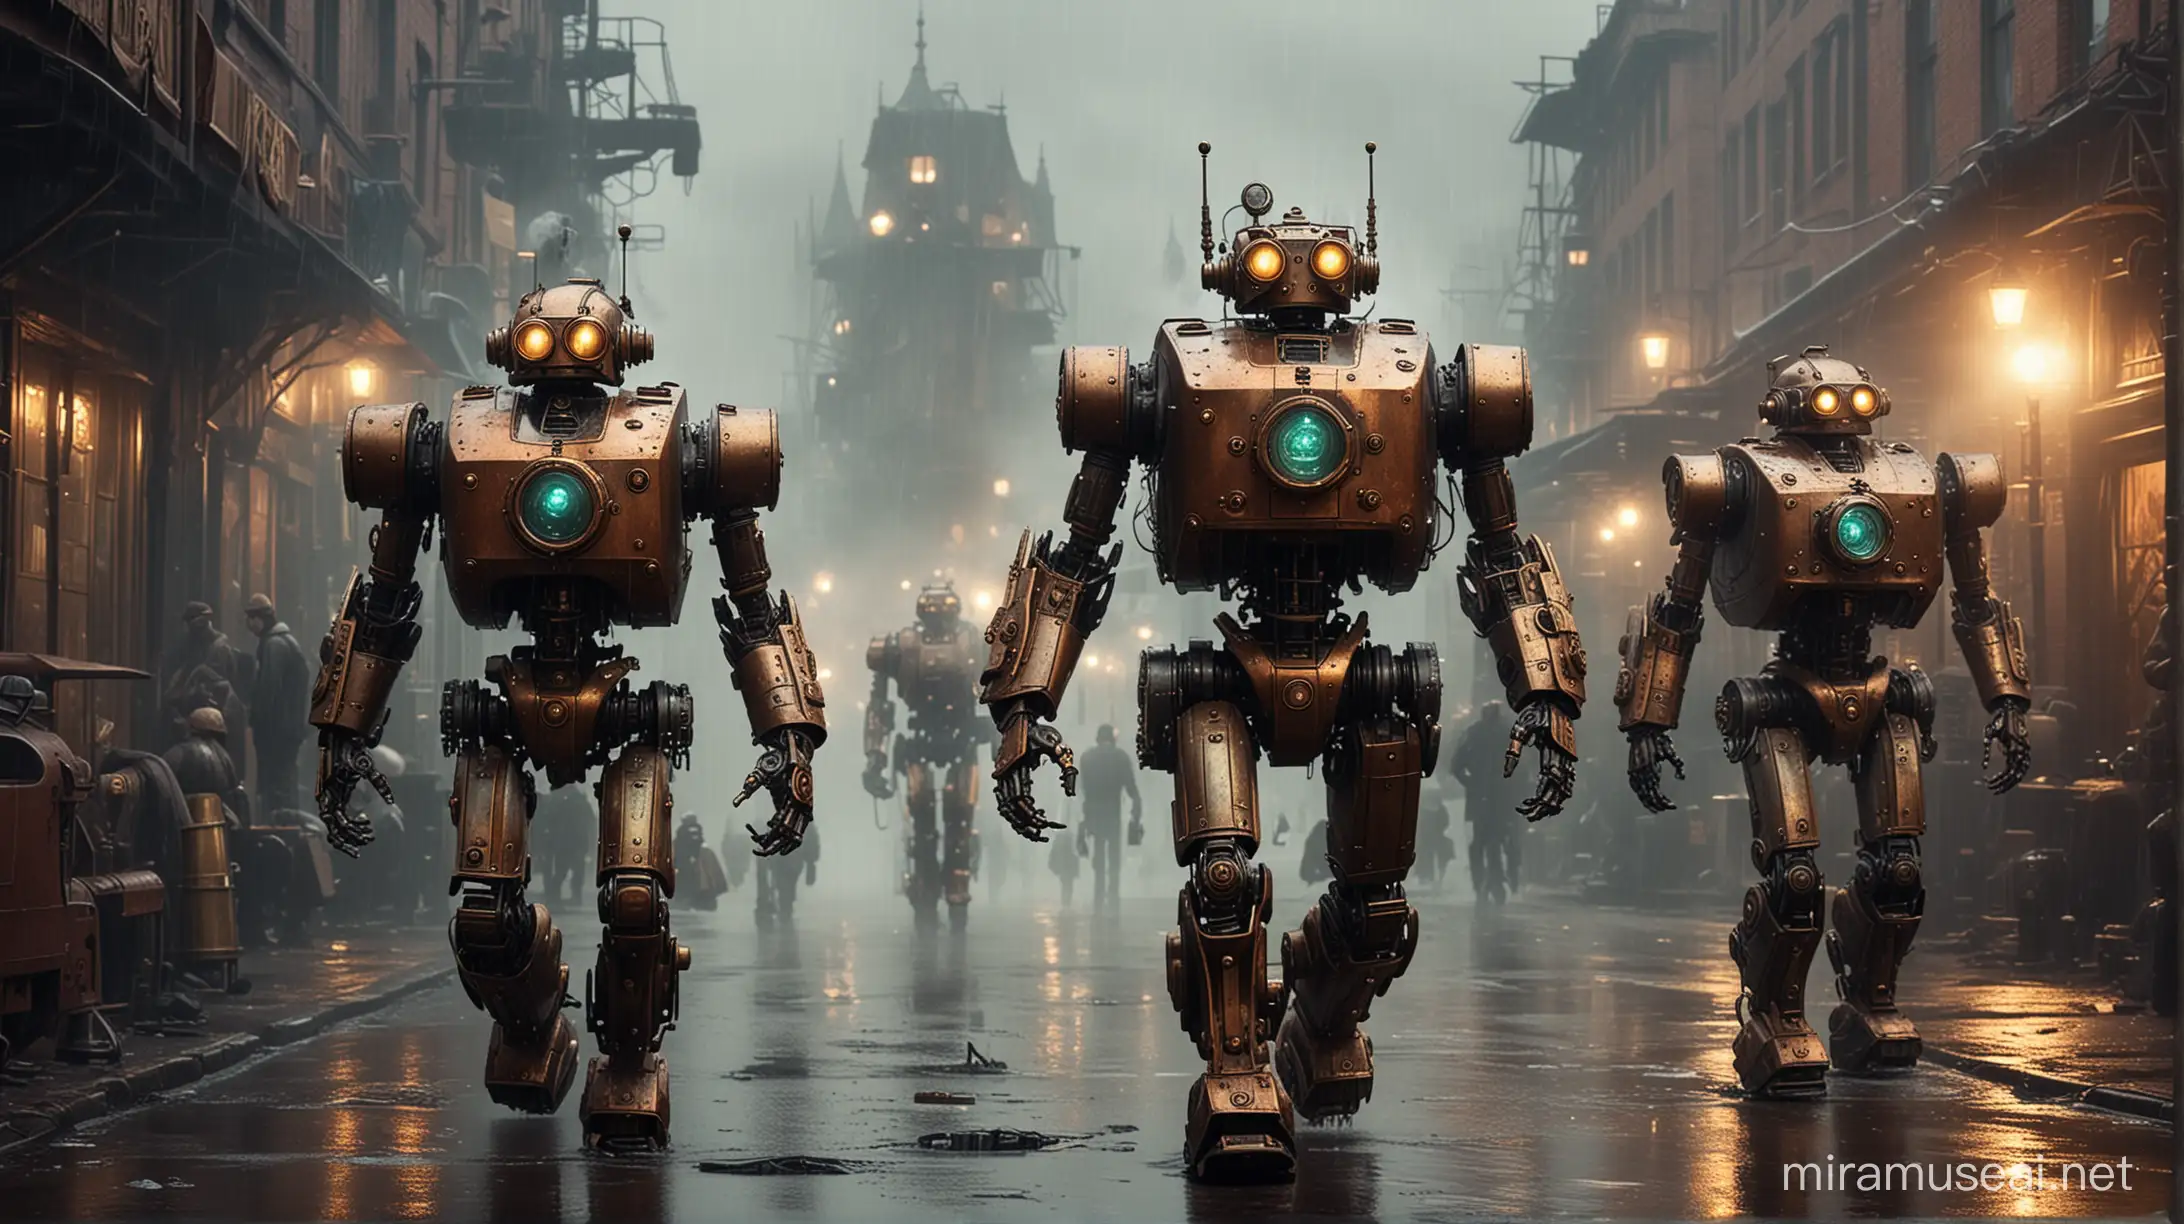 Army of steampunk robots enters a steampunk city. copper, brass, glass, steam, smoke. dark. hard rain.